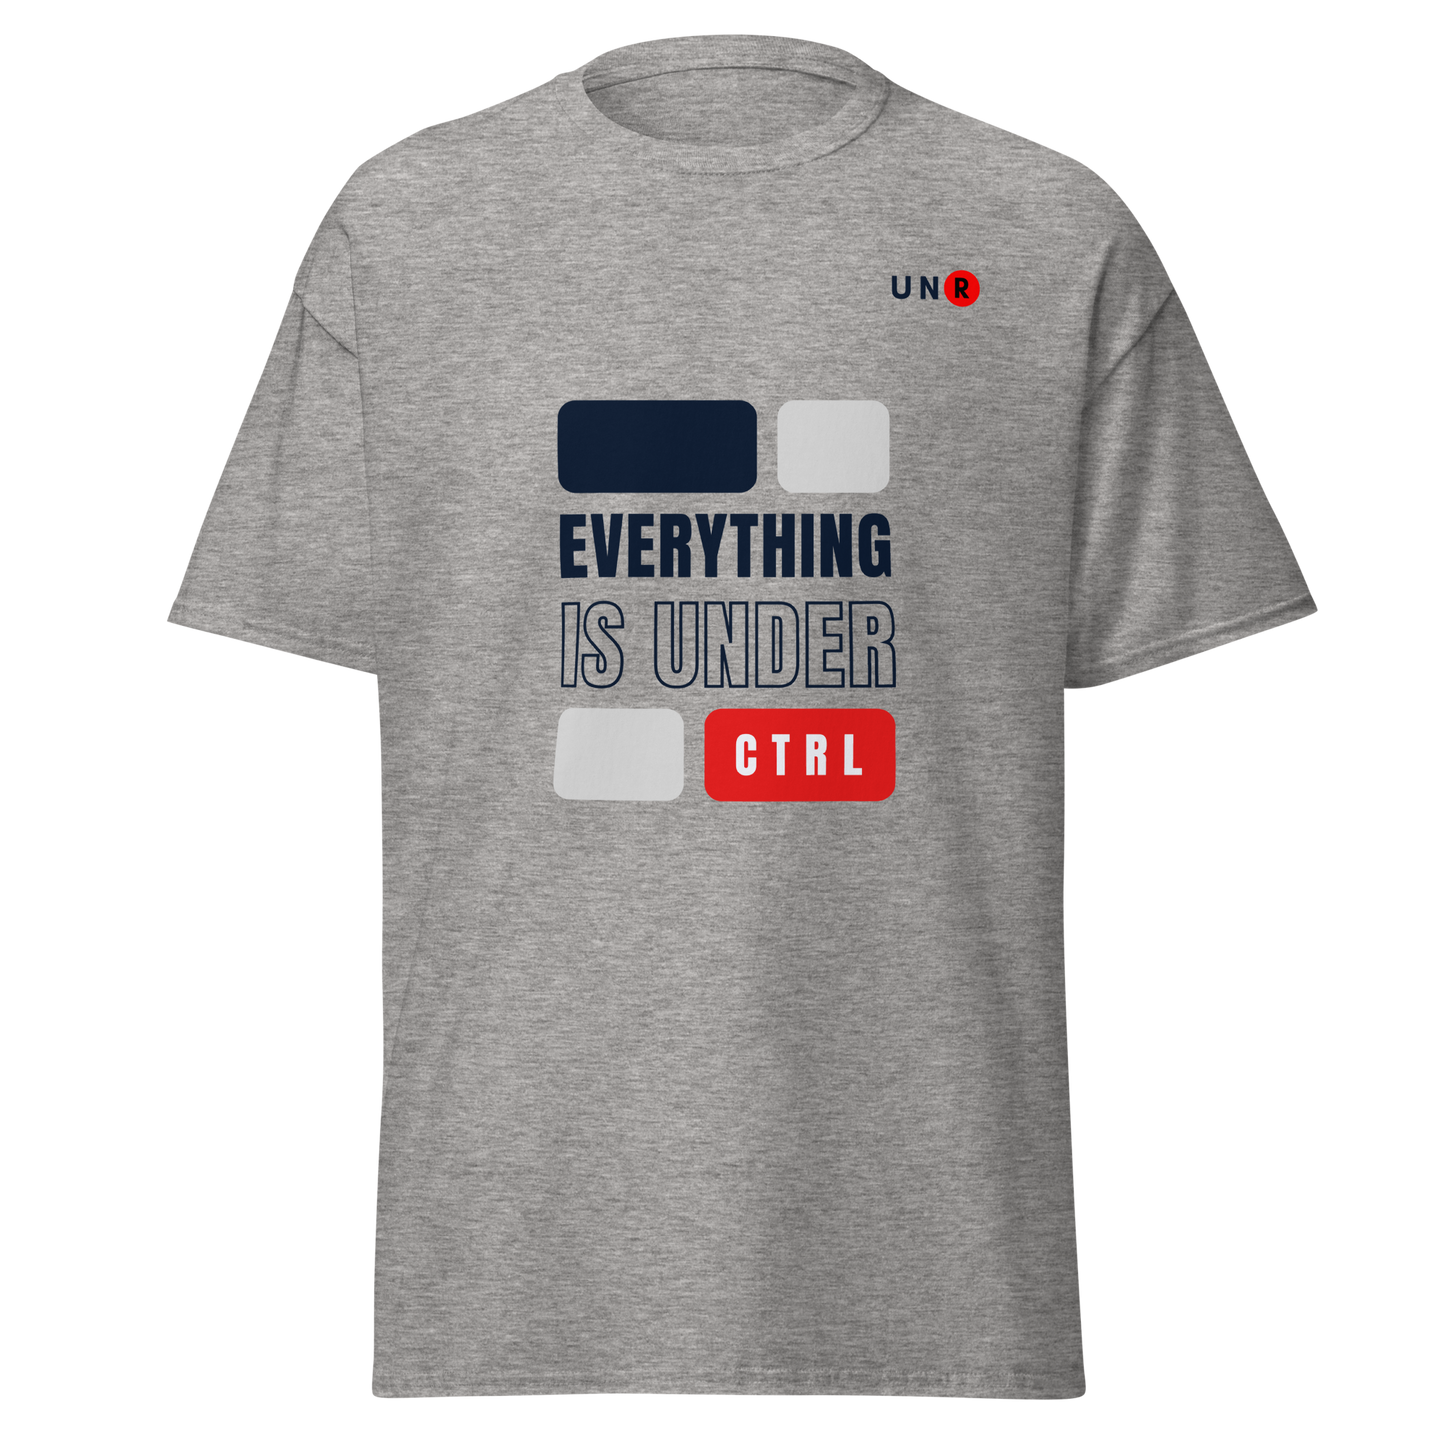 Everything's Under CTRL T-shirt